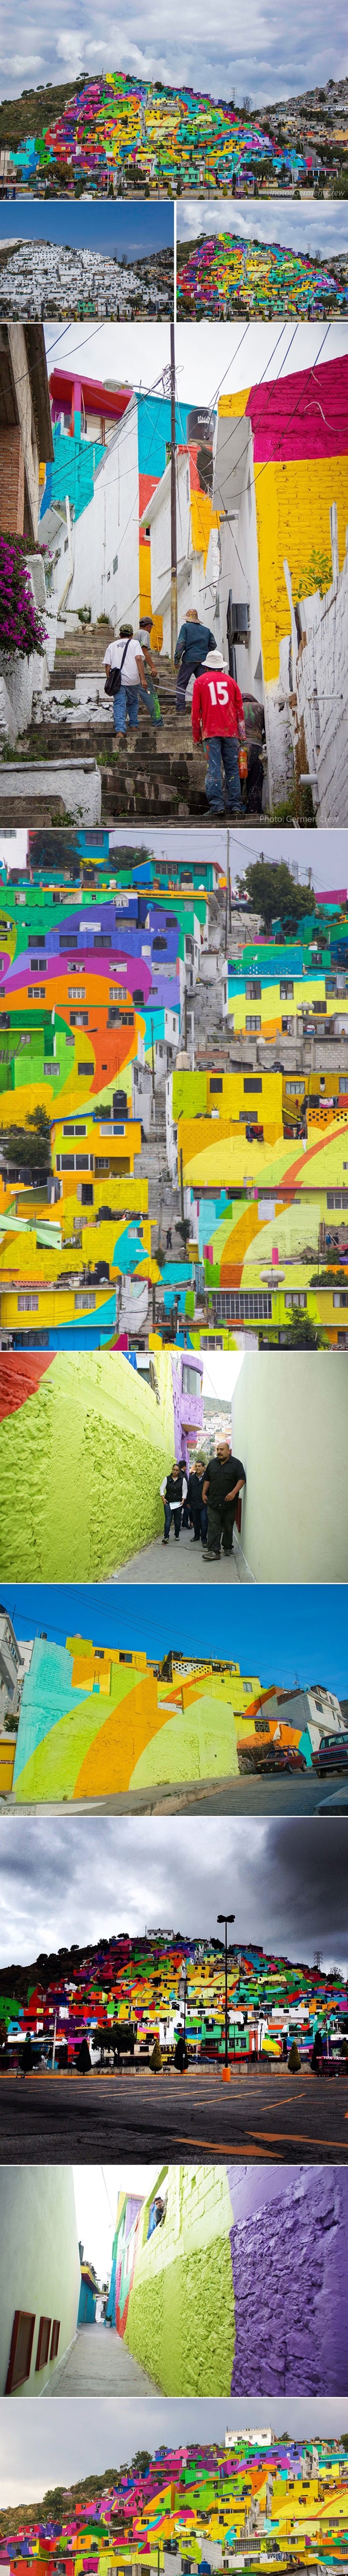 GALERIJA: Meksičke vlasti pozvale grafiti majstore da oboje čitav gradić!